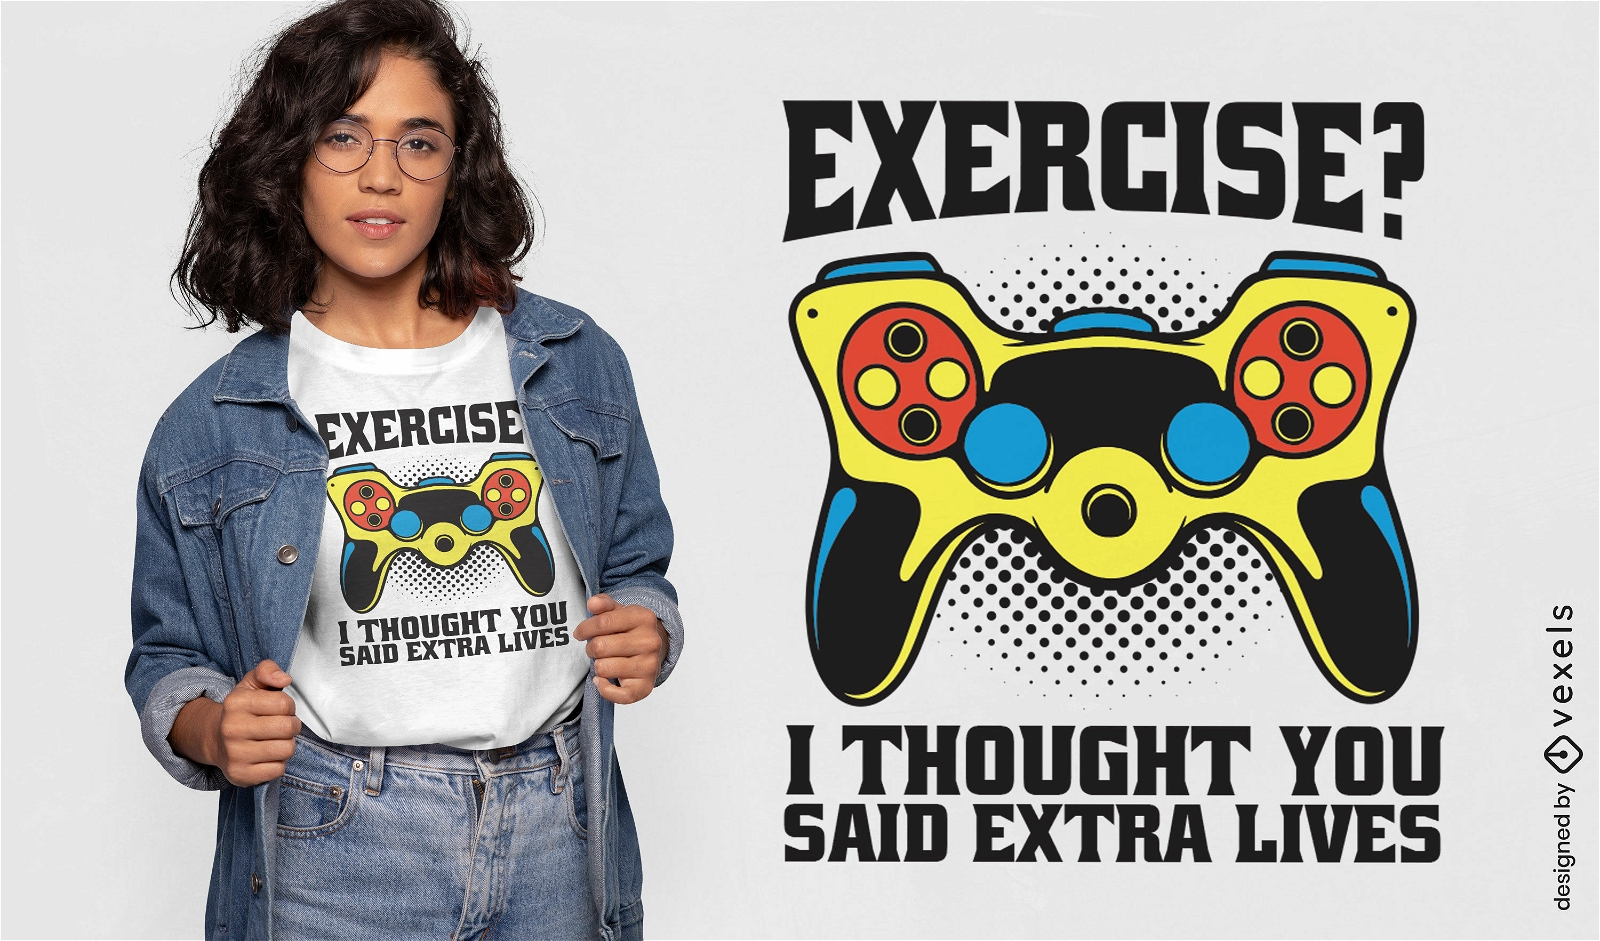 Gaming exercise quote t-shirt desgin 